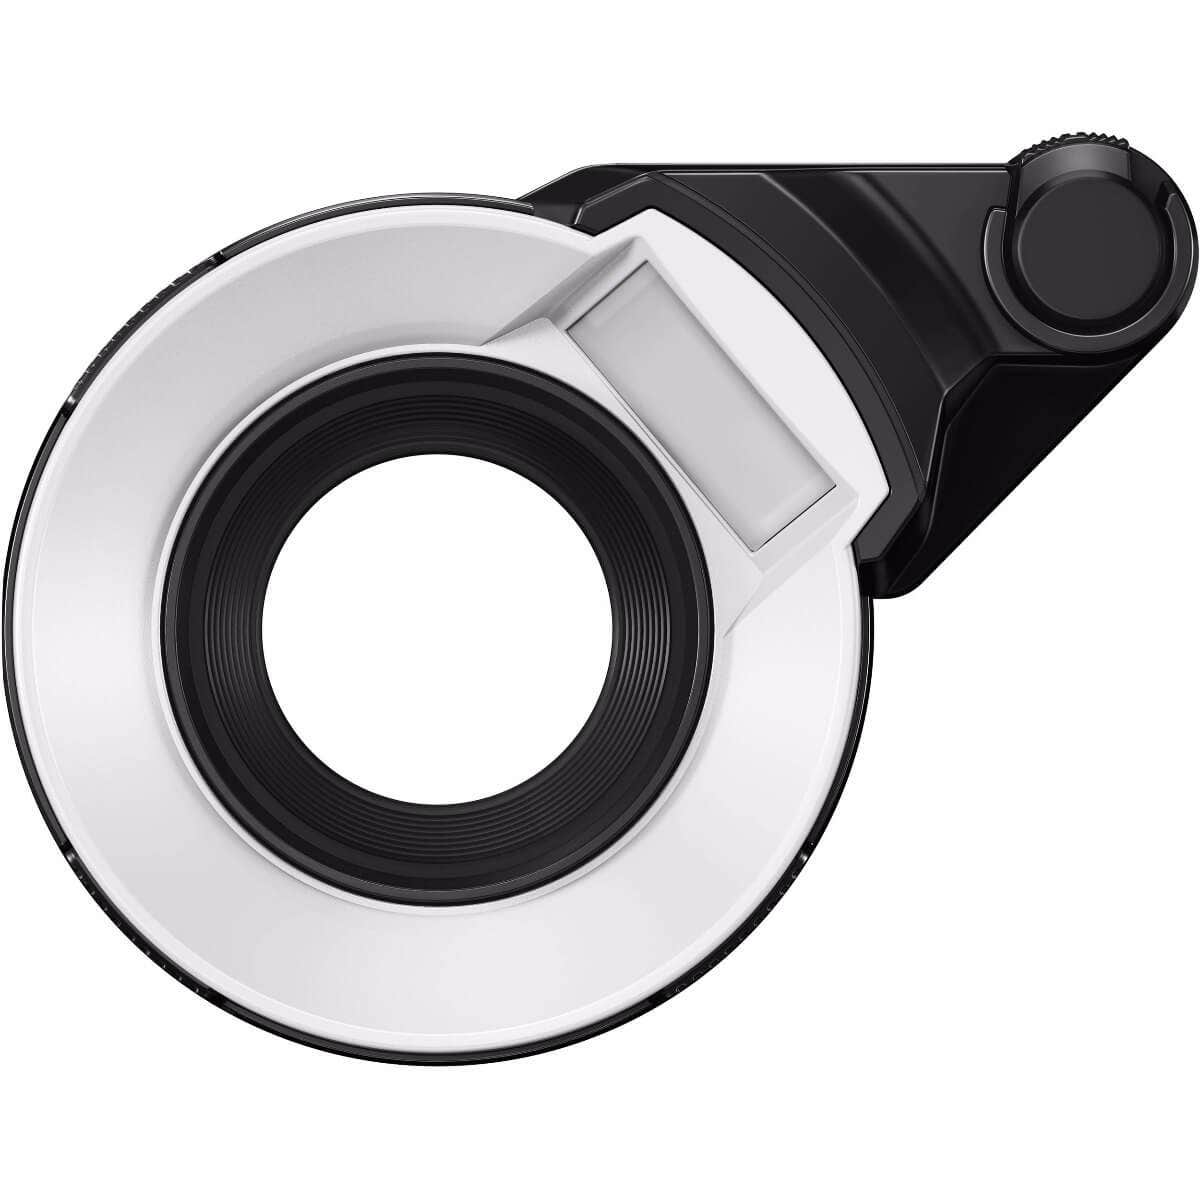 Image of Olympus FD-1 Flash Diffuser Black for TG-7/TG-6 Tough Camera